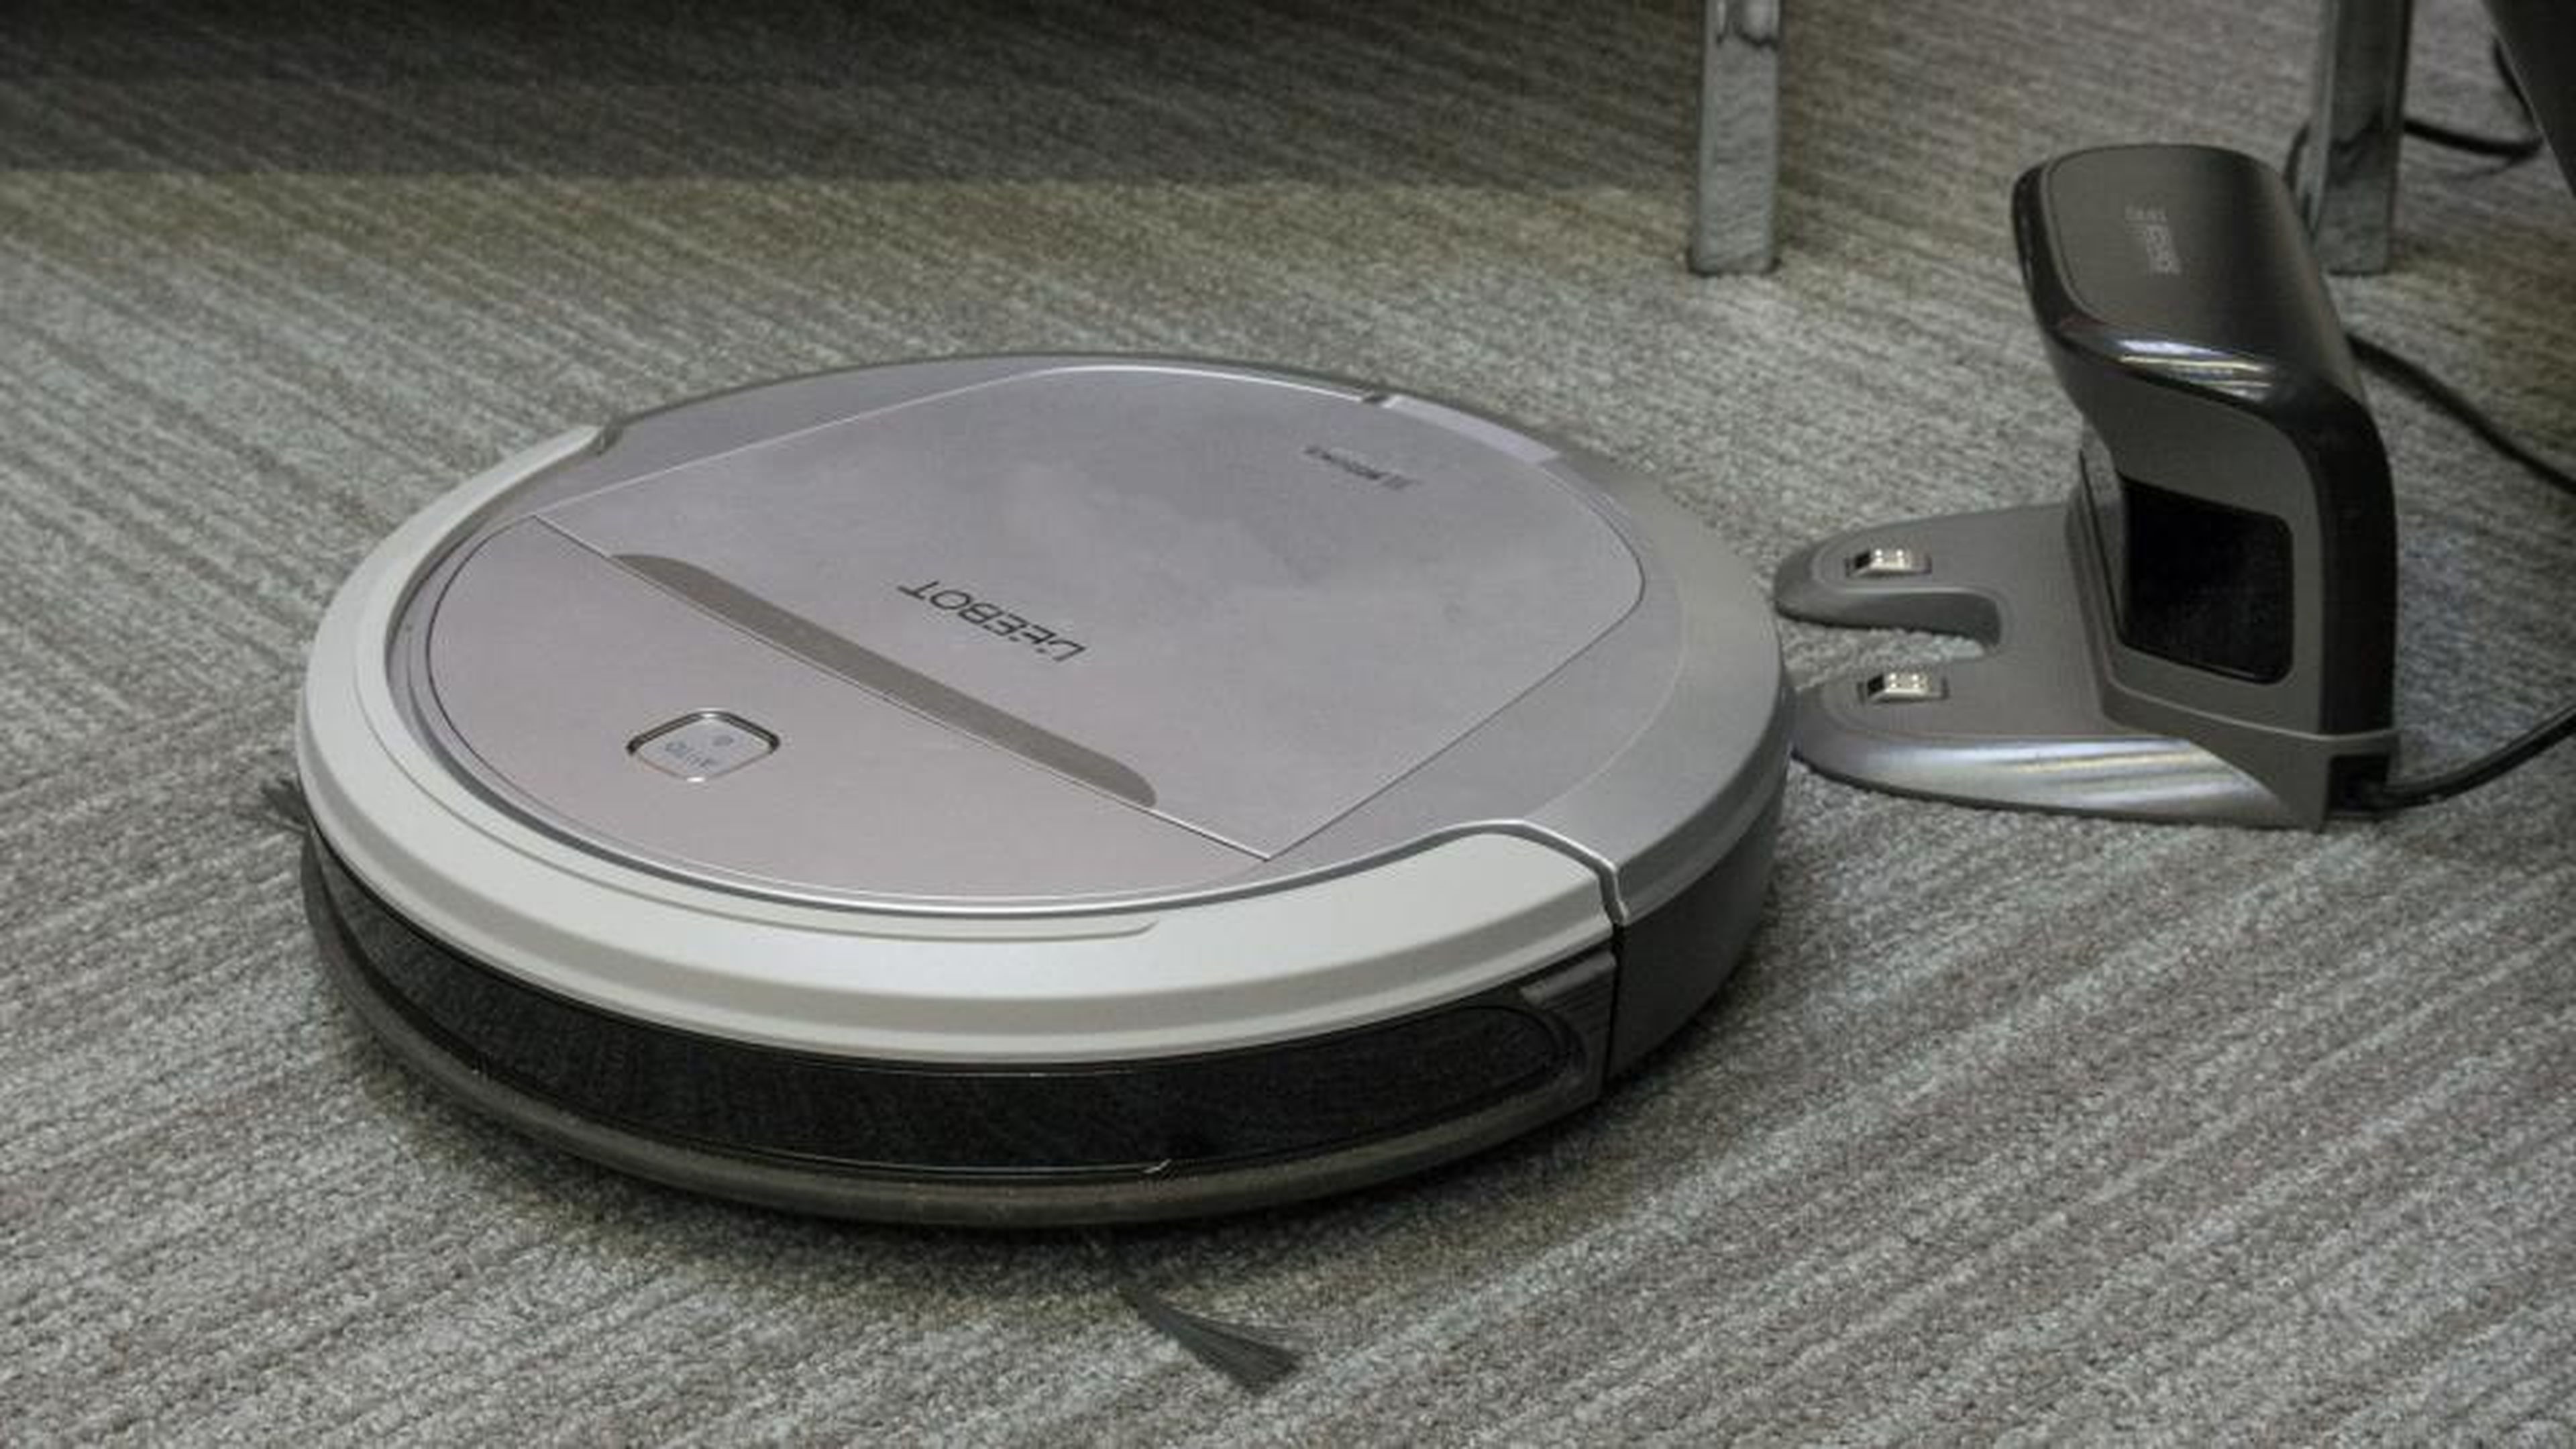 charging robot vacuum cleaner